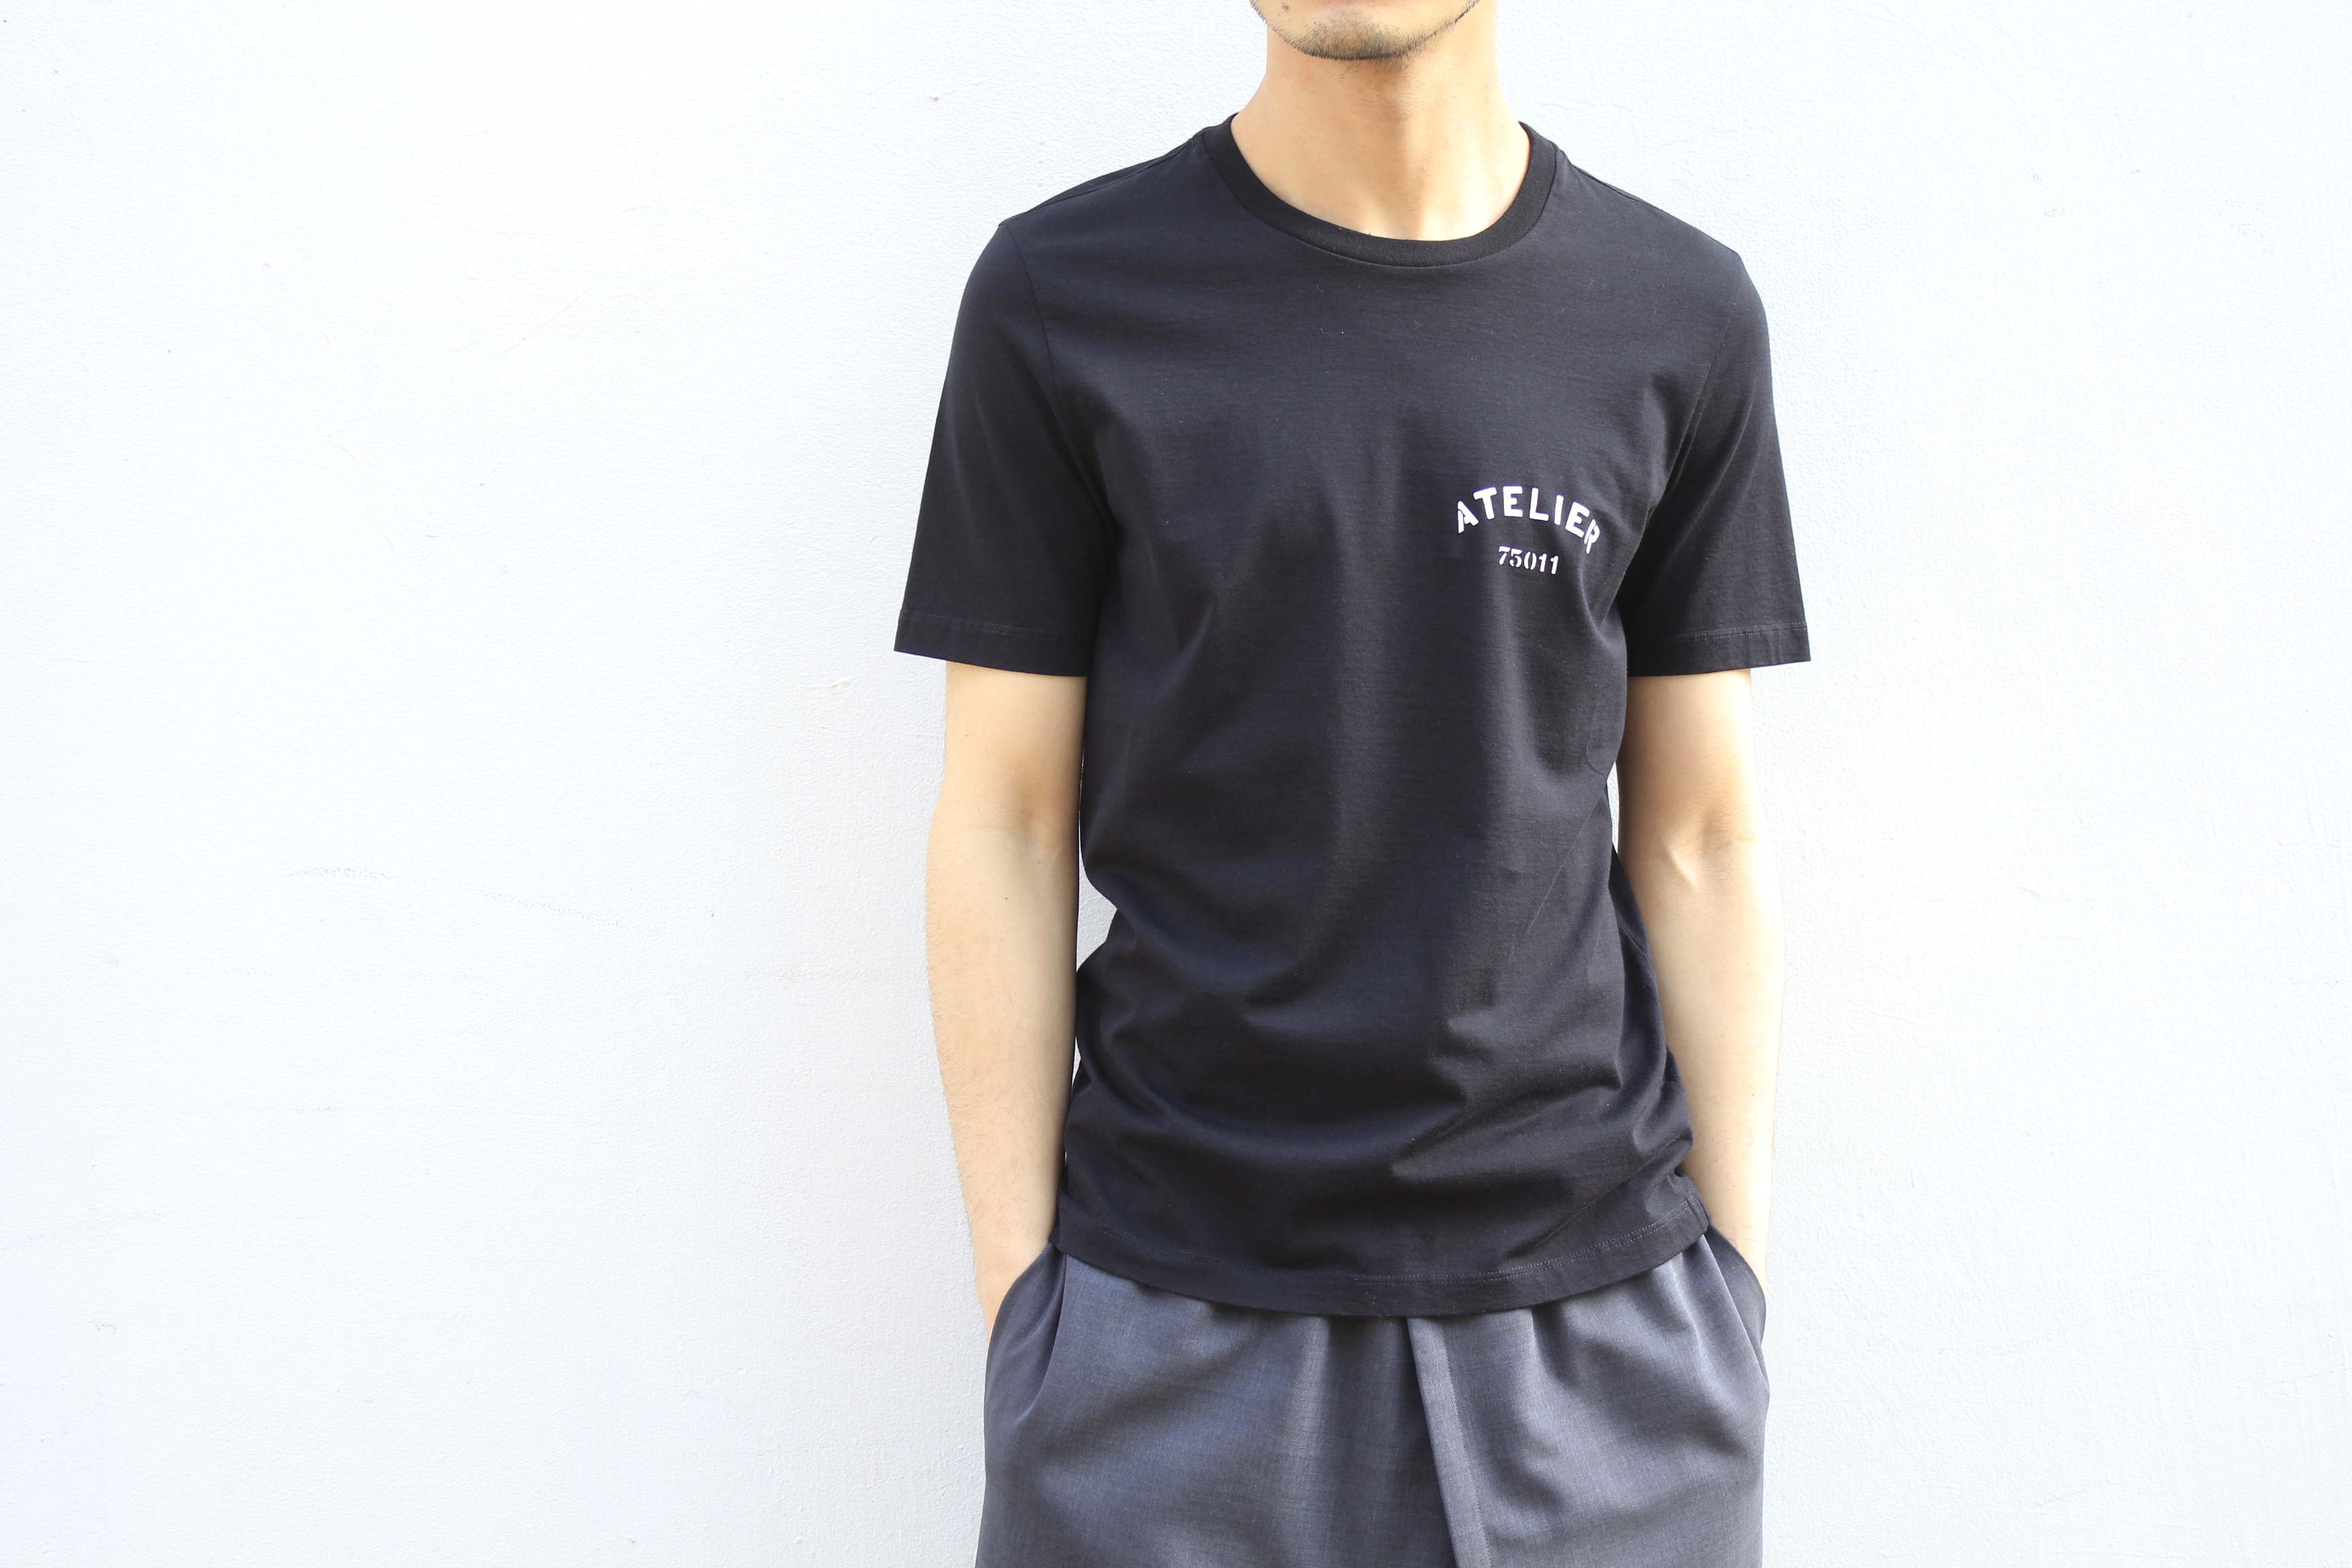 MAISON MARGIELA Atelier T-shirt | HUES 福岡セレクトショップ